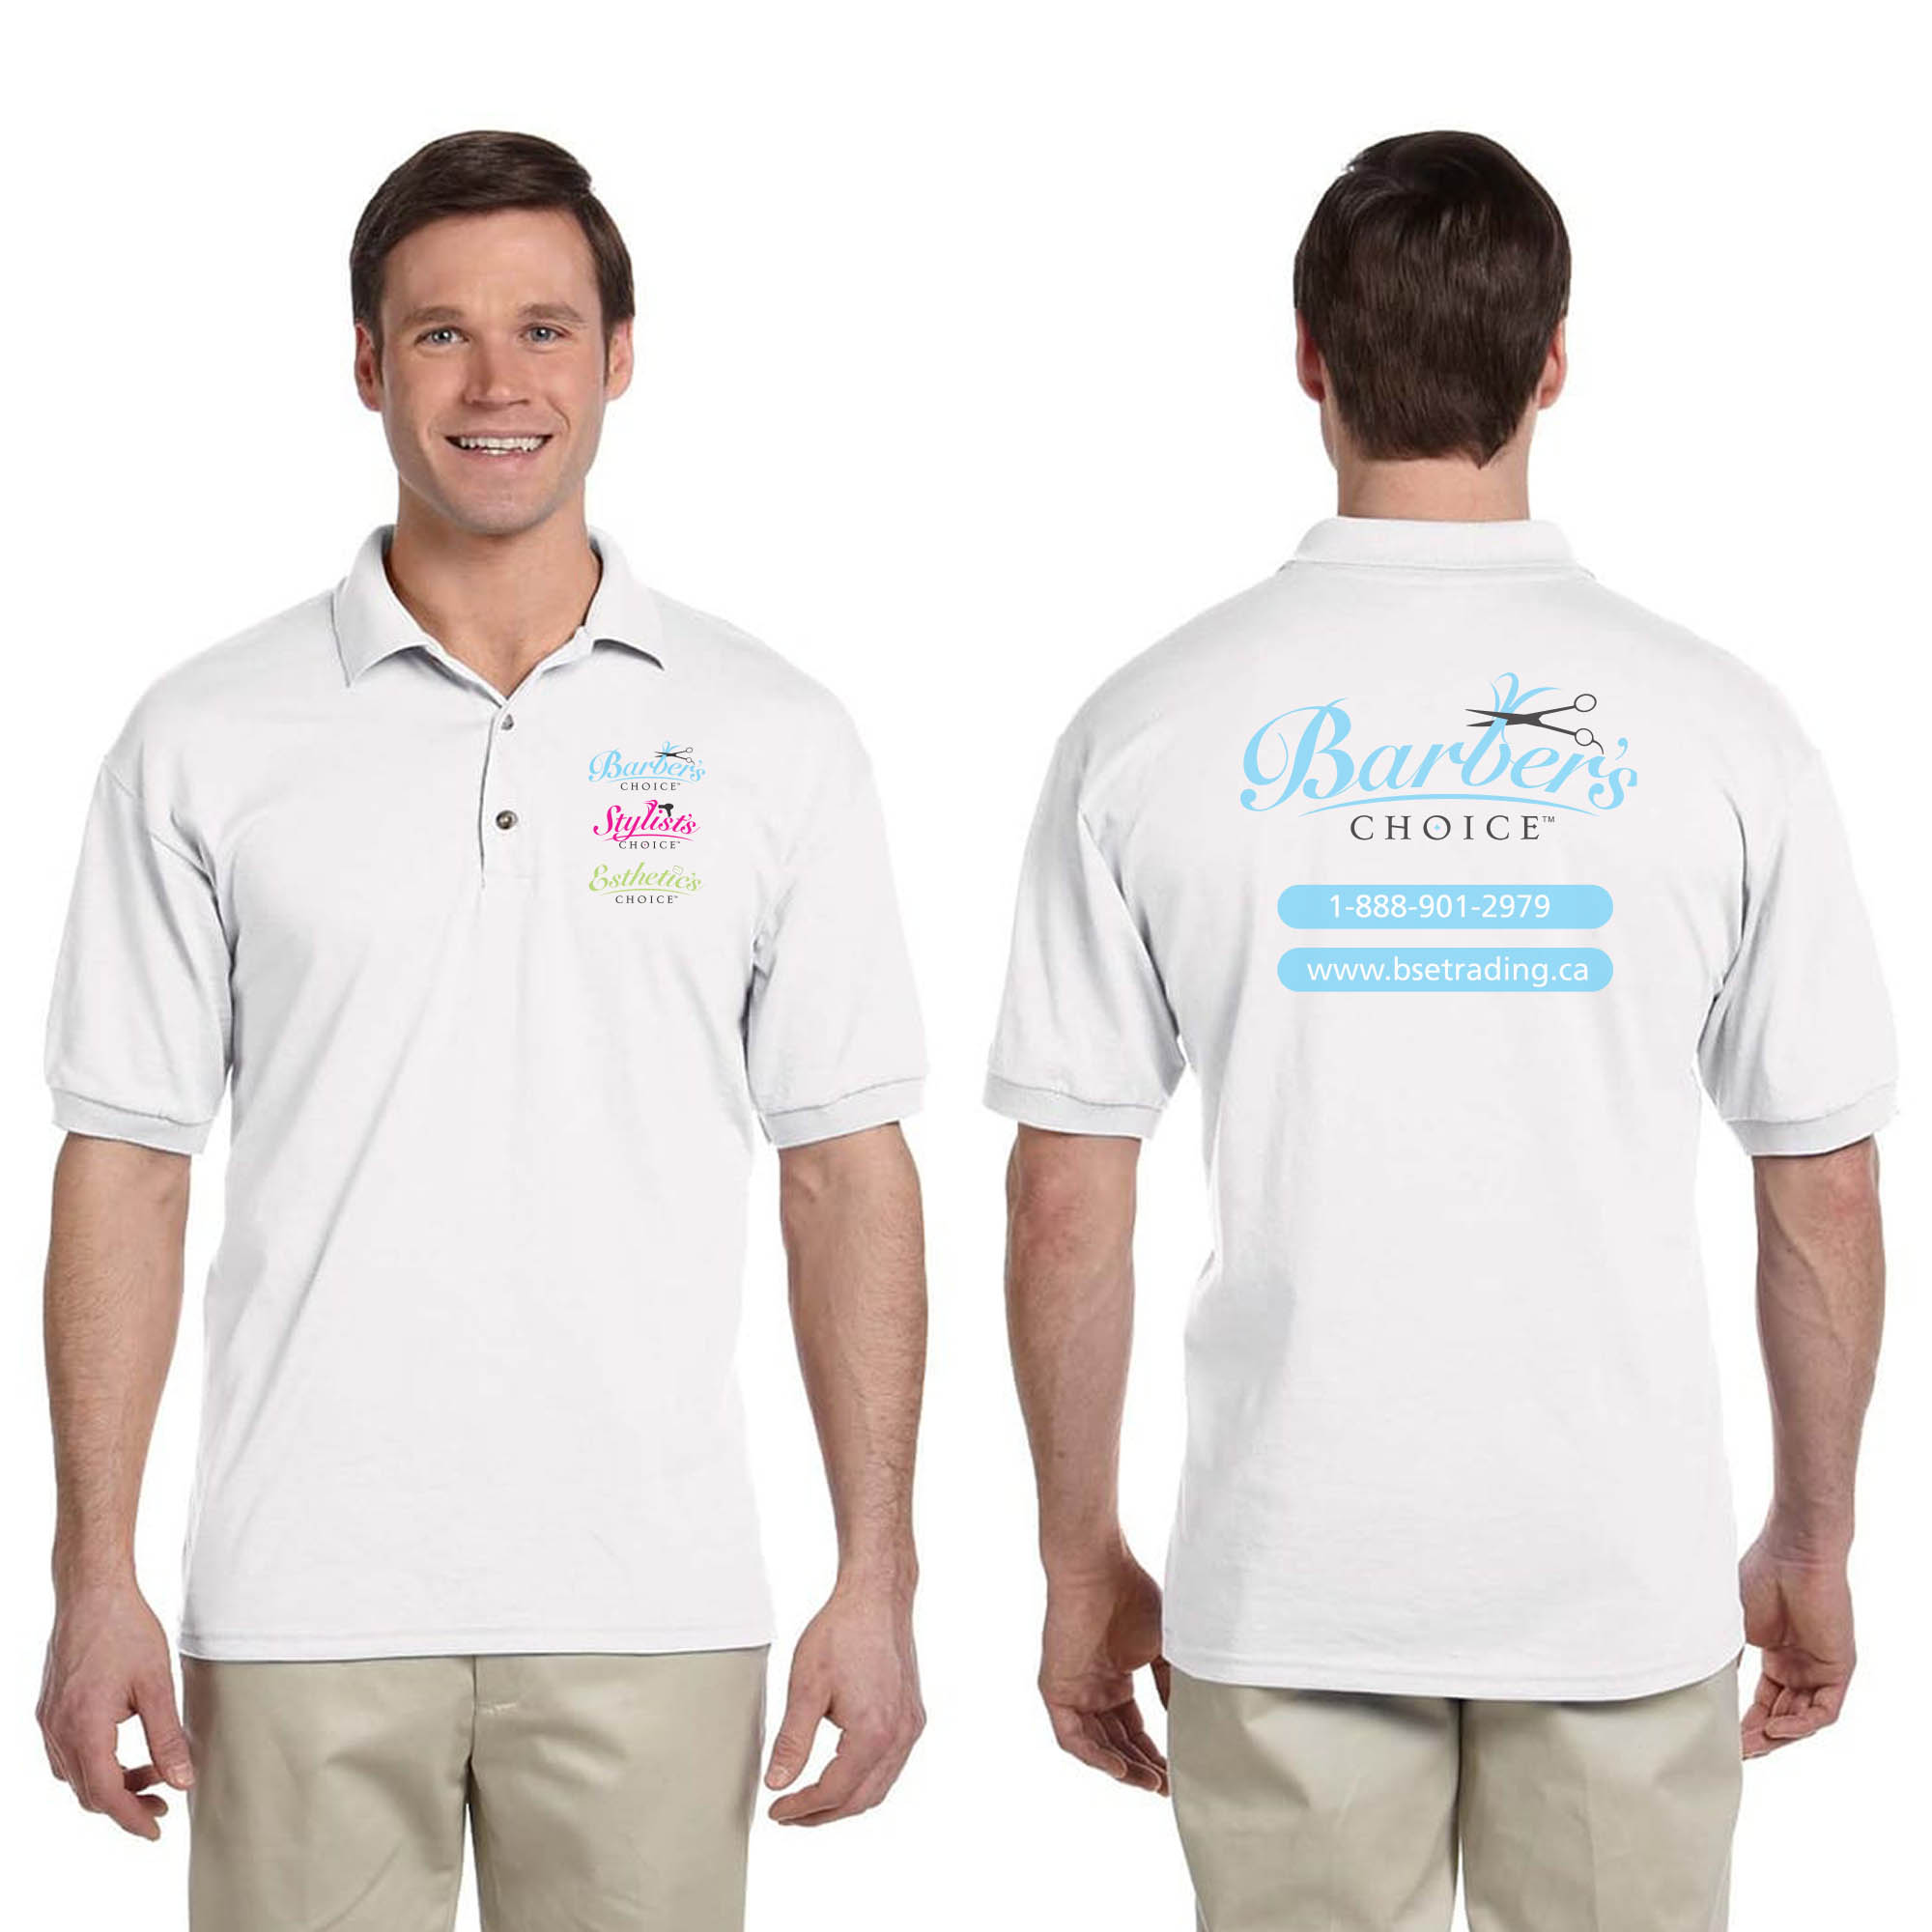 Barber's Choice - Adult Golf Shirts - Apparel